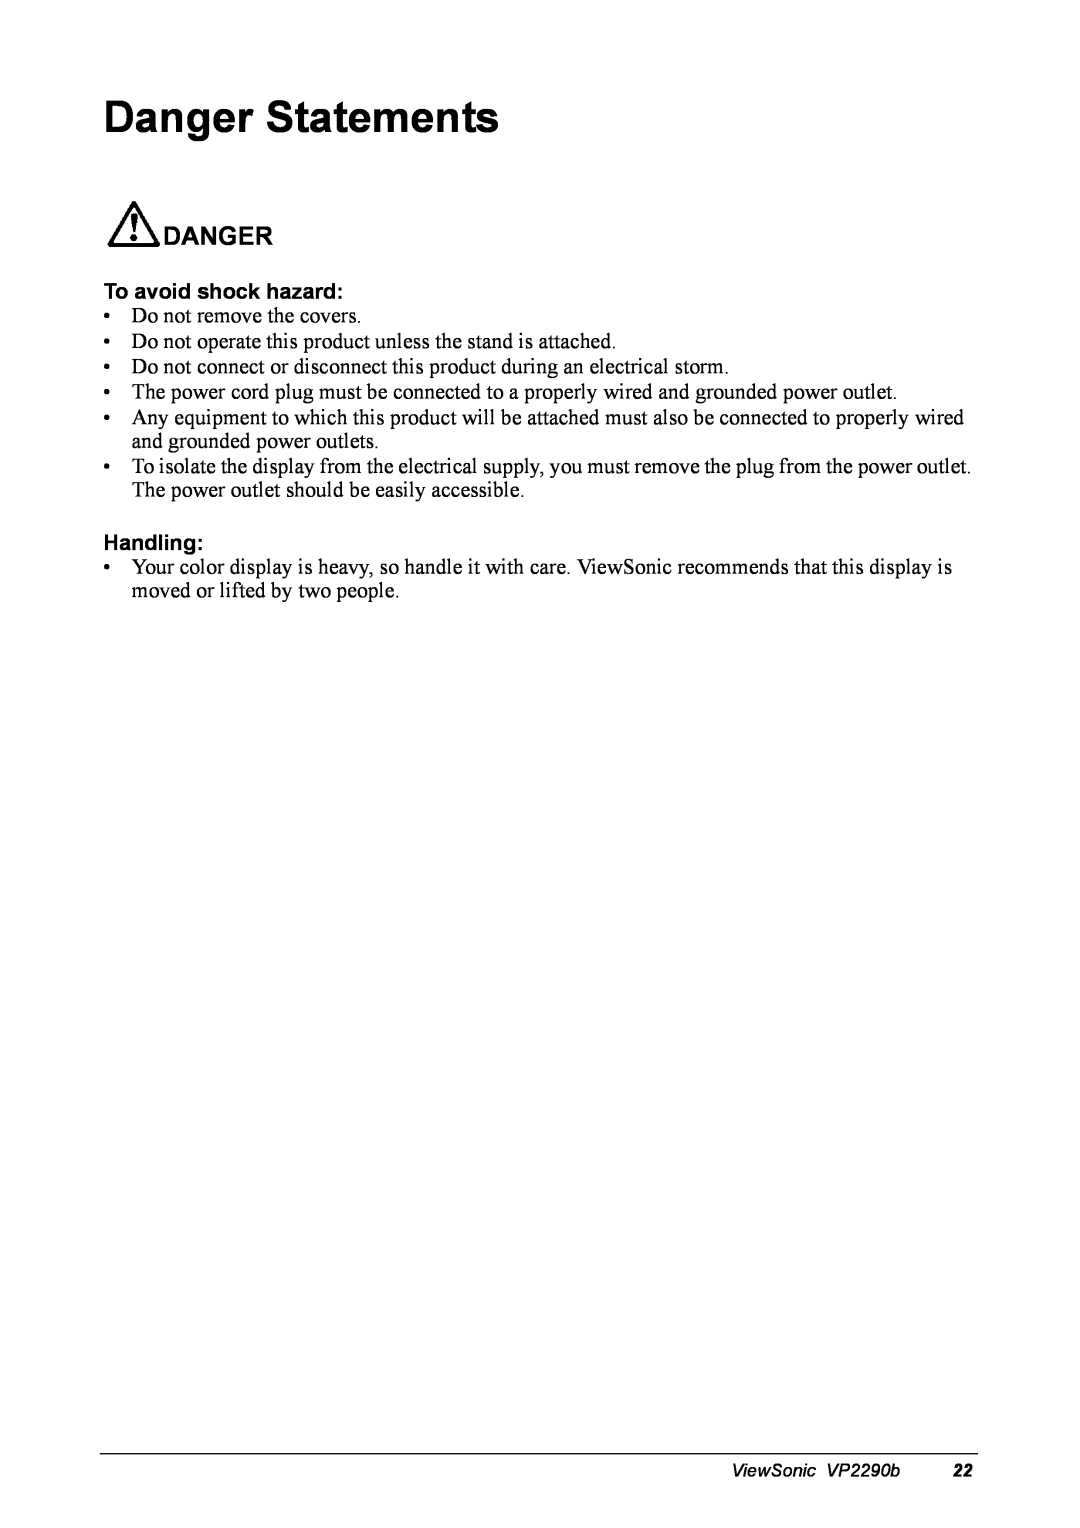 ViewSonic VP2290B manual Danger Statements, To avoid shock hazard, Handling 